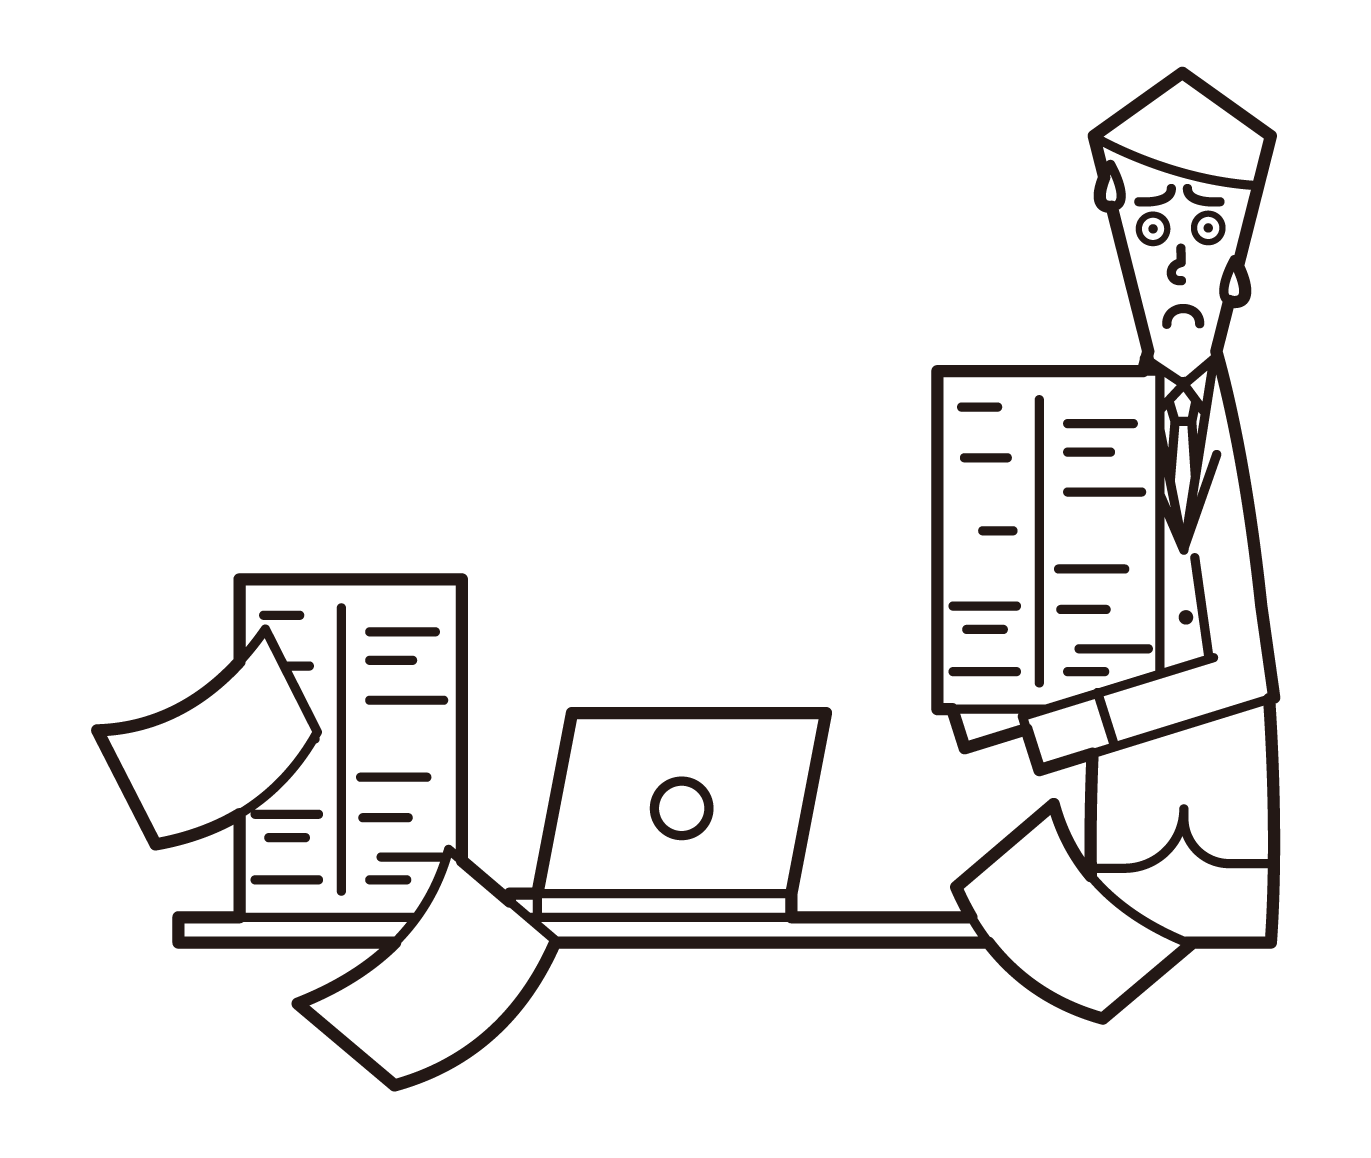 Illustration of a man organizing documents